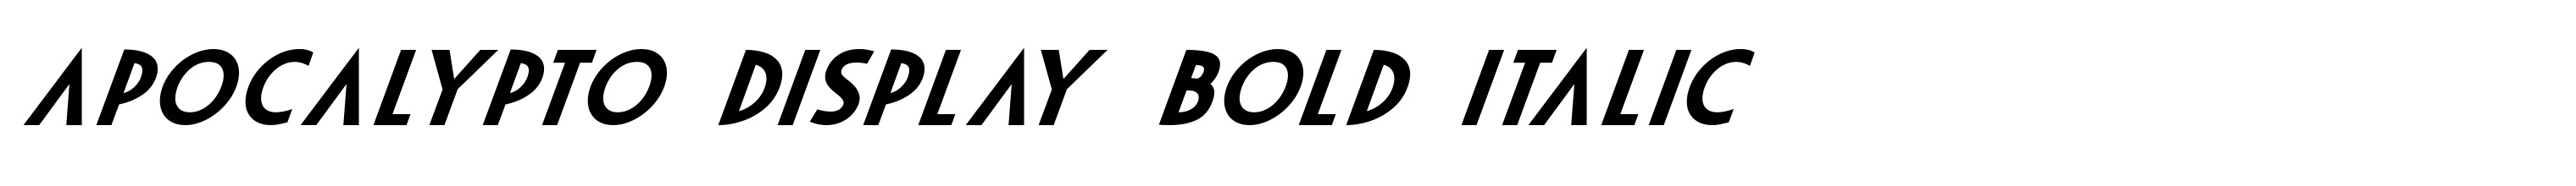 Apocalypto Display Bold Italic